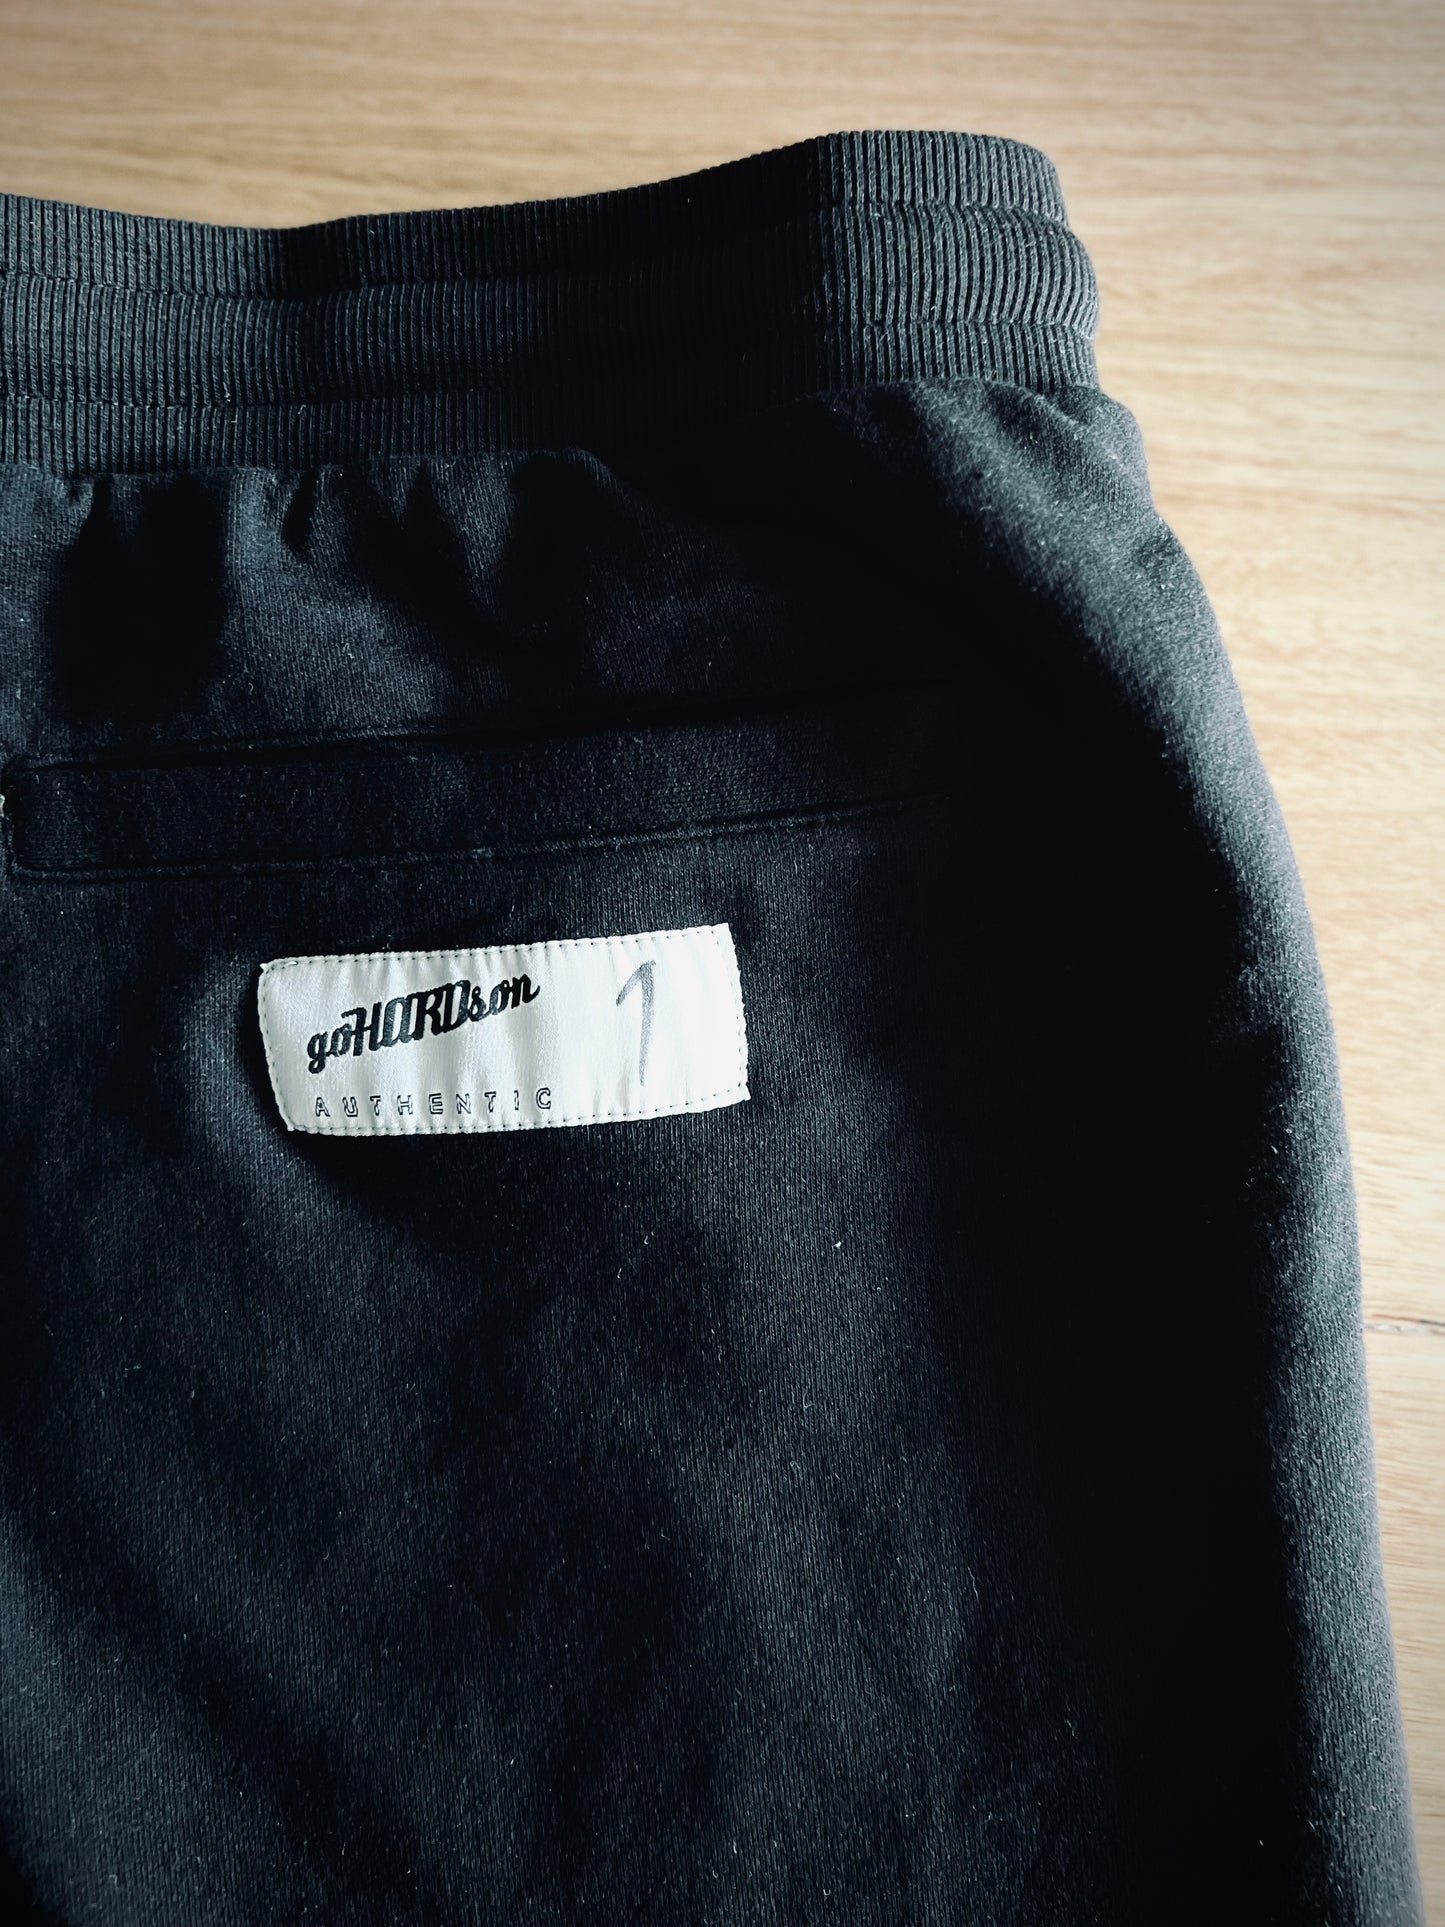 goHARDson fortune favours the brave men's black 100% cotton shorts streetwear summer fashion 